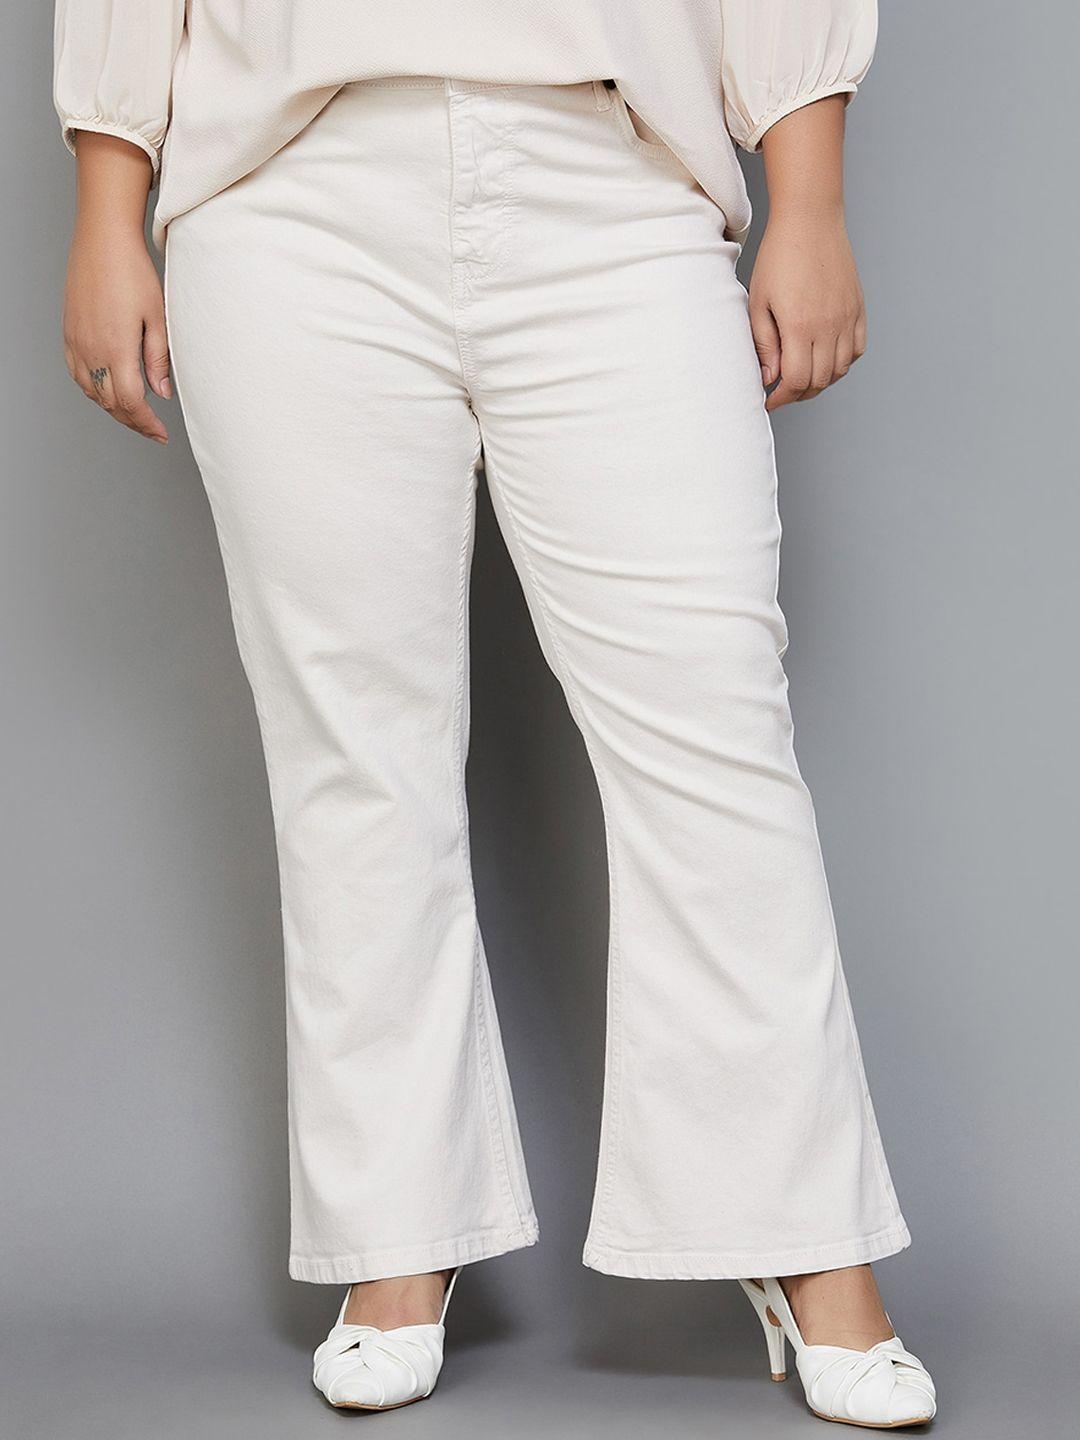 nexus by lifestyle women clean look cotton bootcut jeans